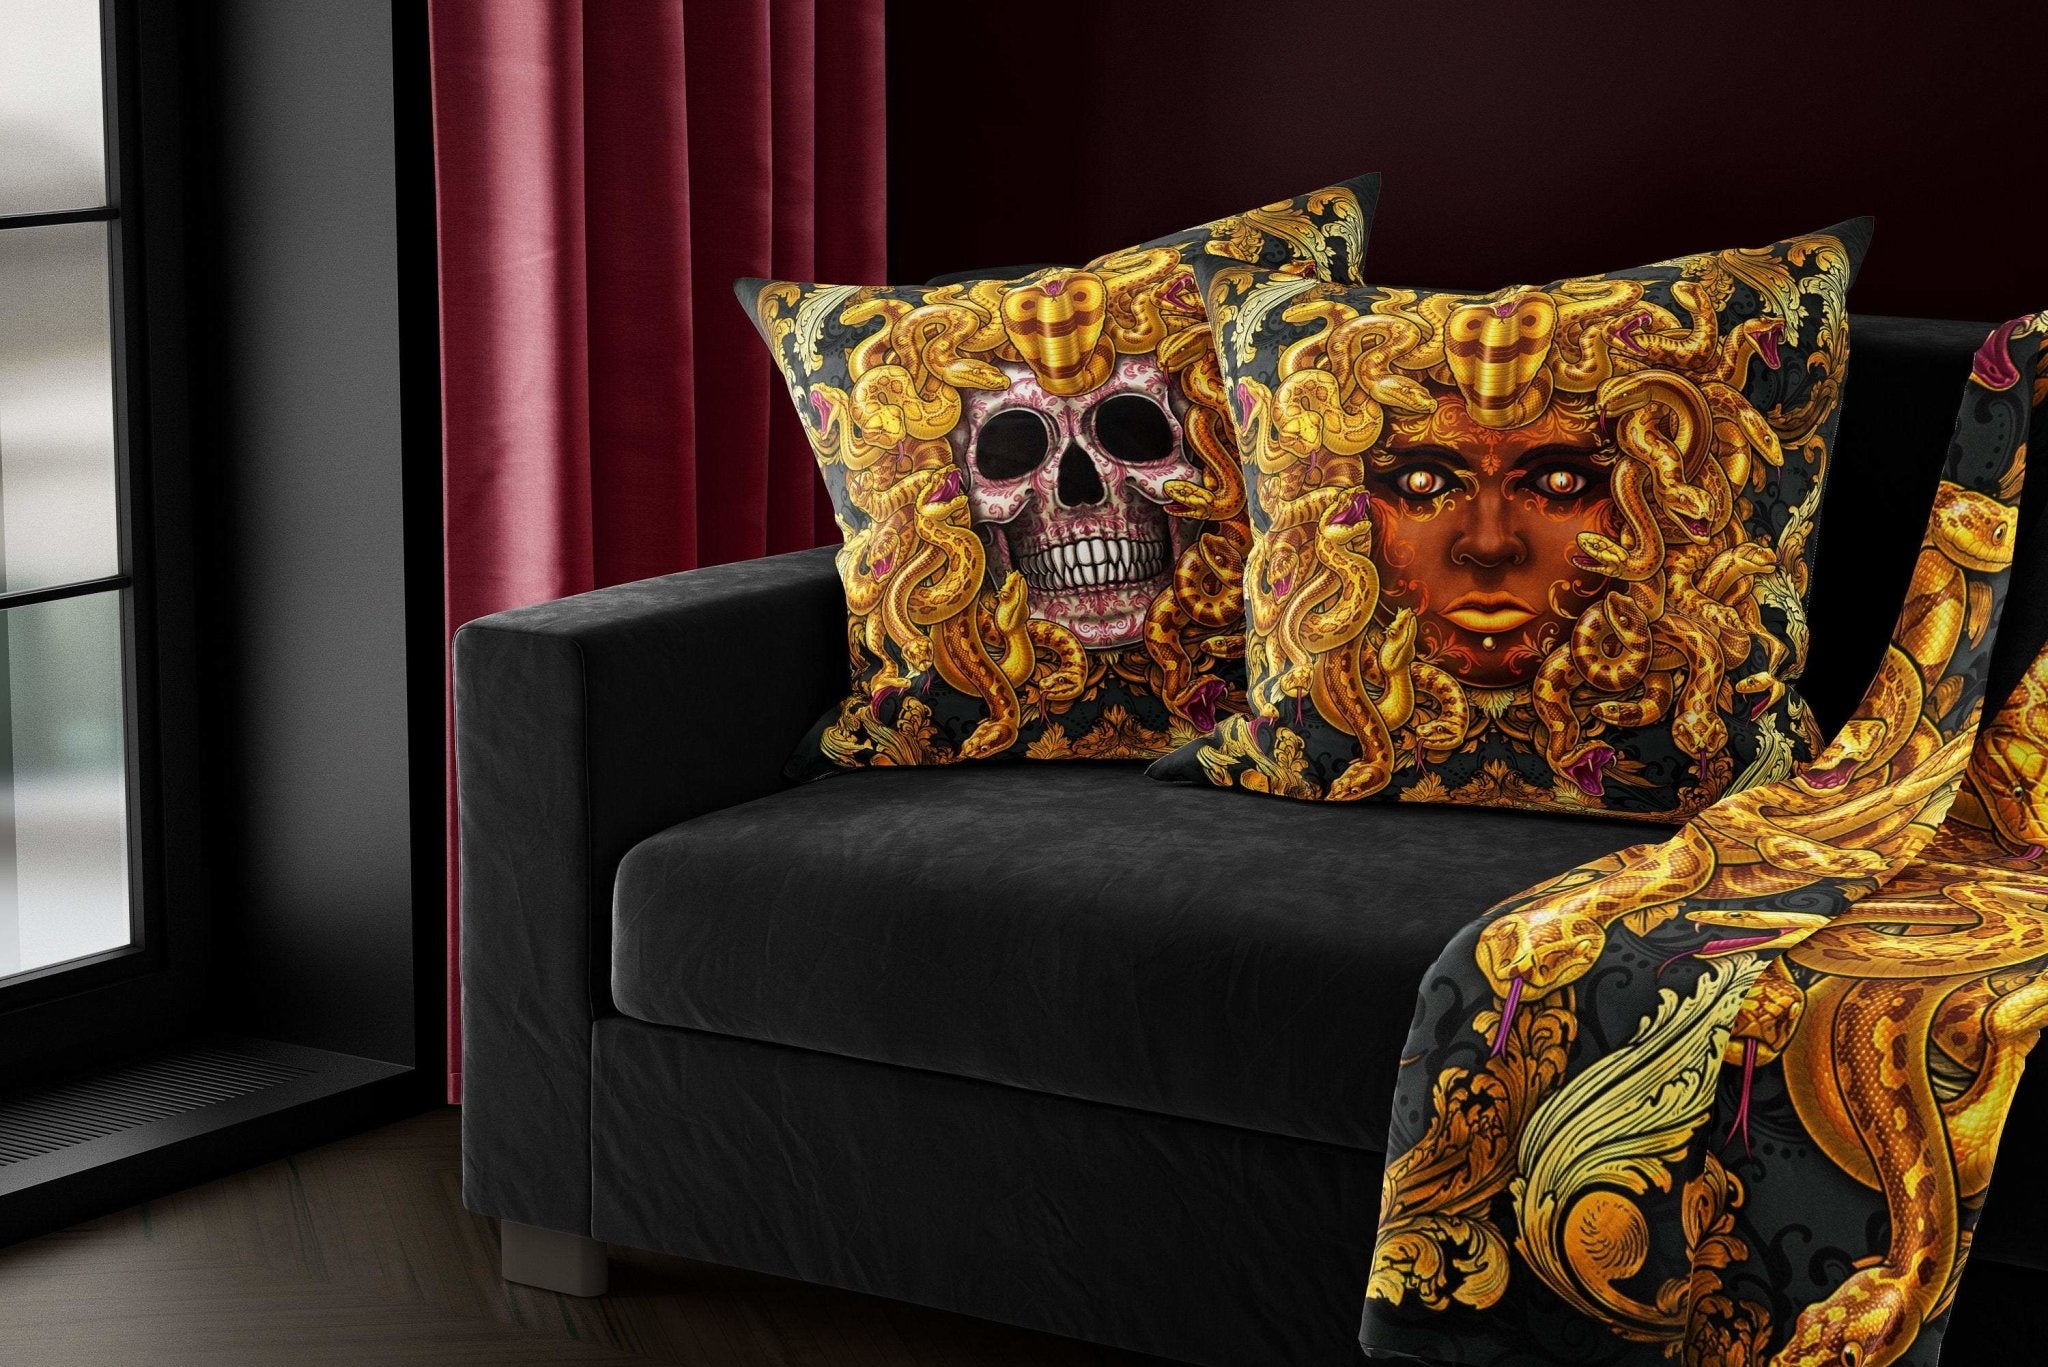 Skull Throw Pillow, Decorative Accent Cushion, Medusa, Game Room Decor, Macabre Art, Alternative Home - Gold Snakes - Abysm Internal